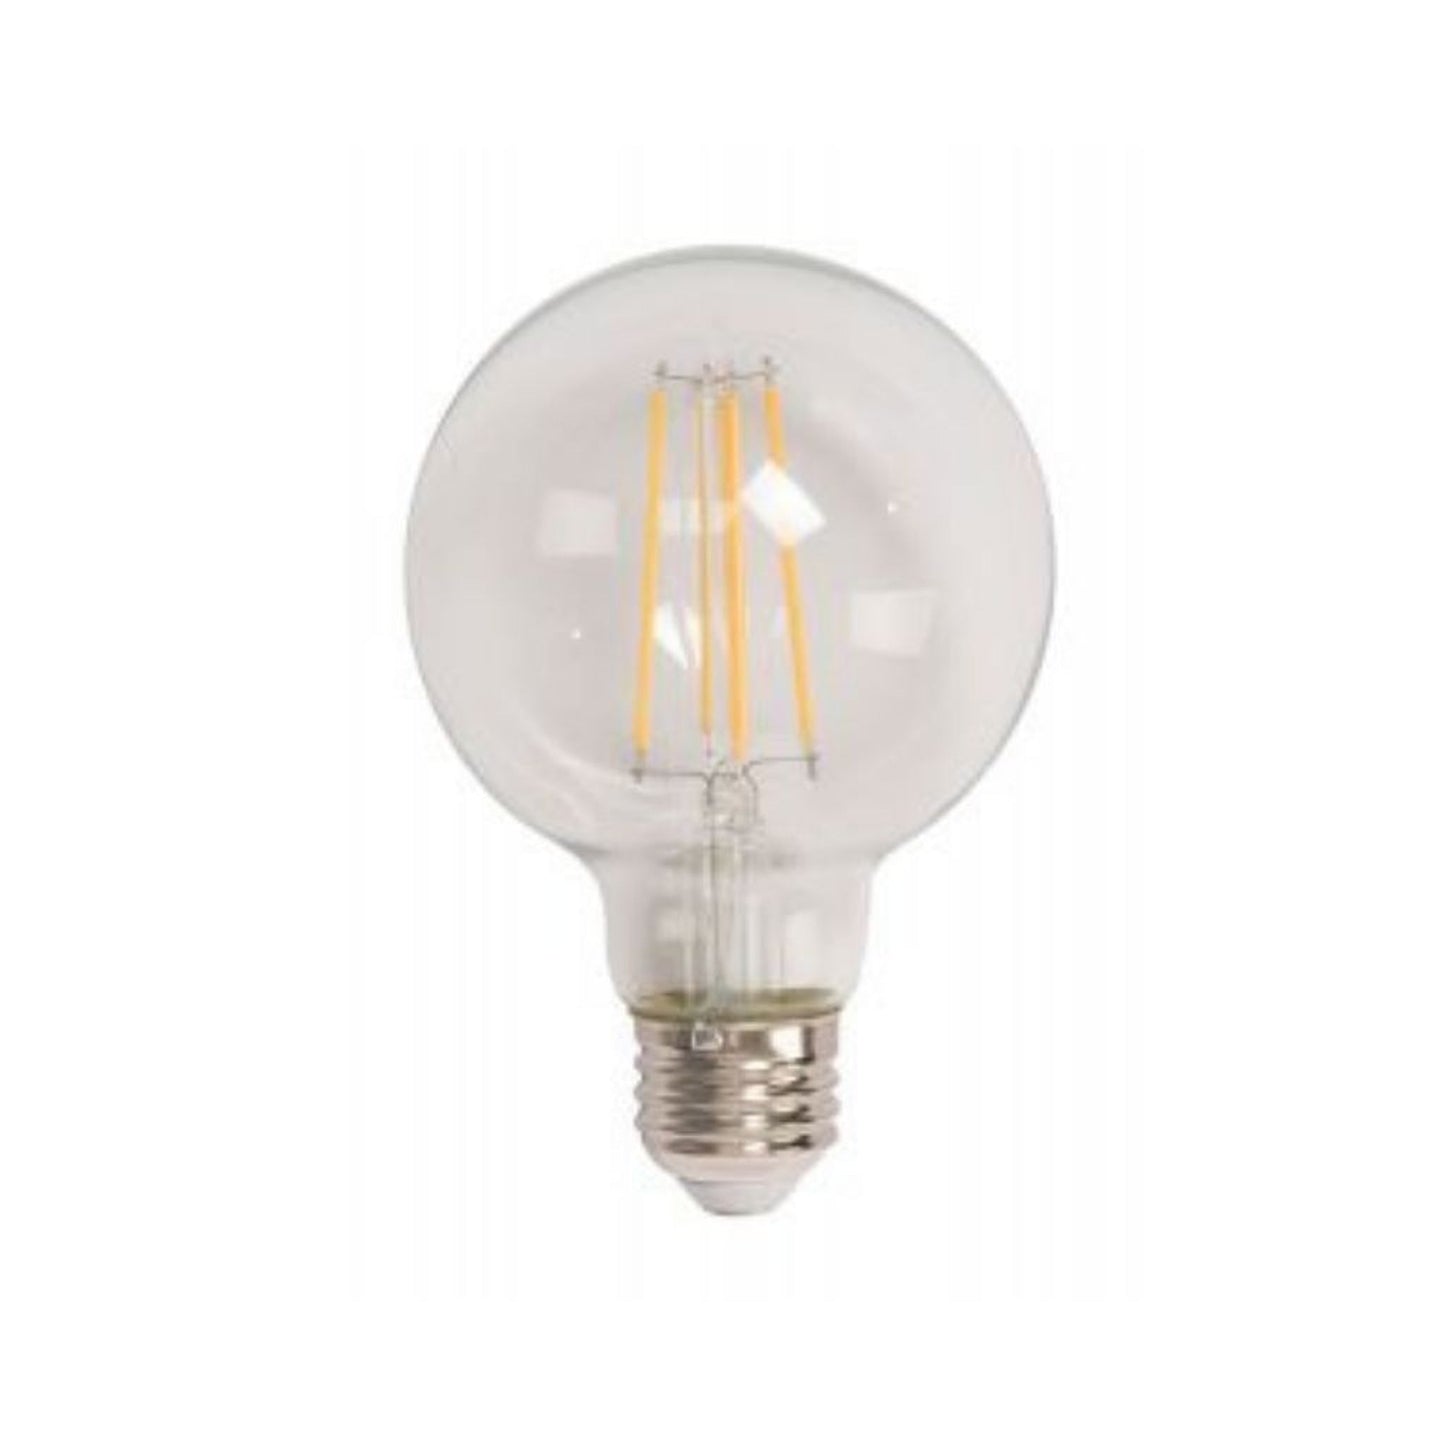 Craftmade 8-Watt G25 Clear Finish, E26 Medium Base, 4.7" M.O.L., 2700K Warm White LED Light Bulb